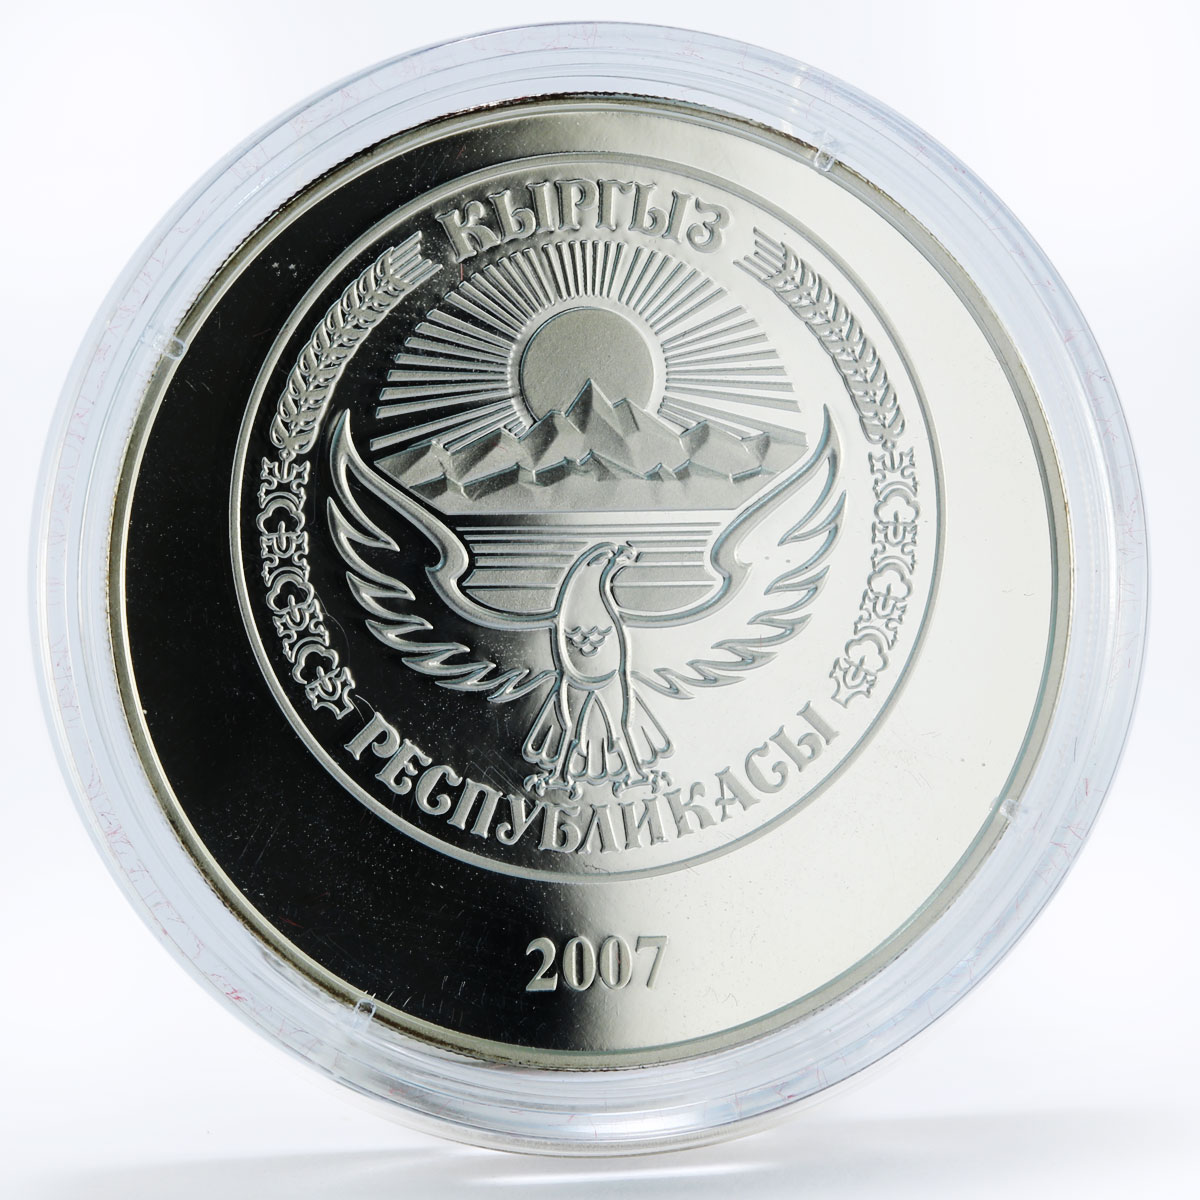 Kyrgyzstan 10 som Shanghai Cooperation Organization Meeting silver coin 2007